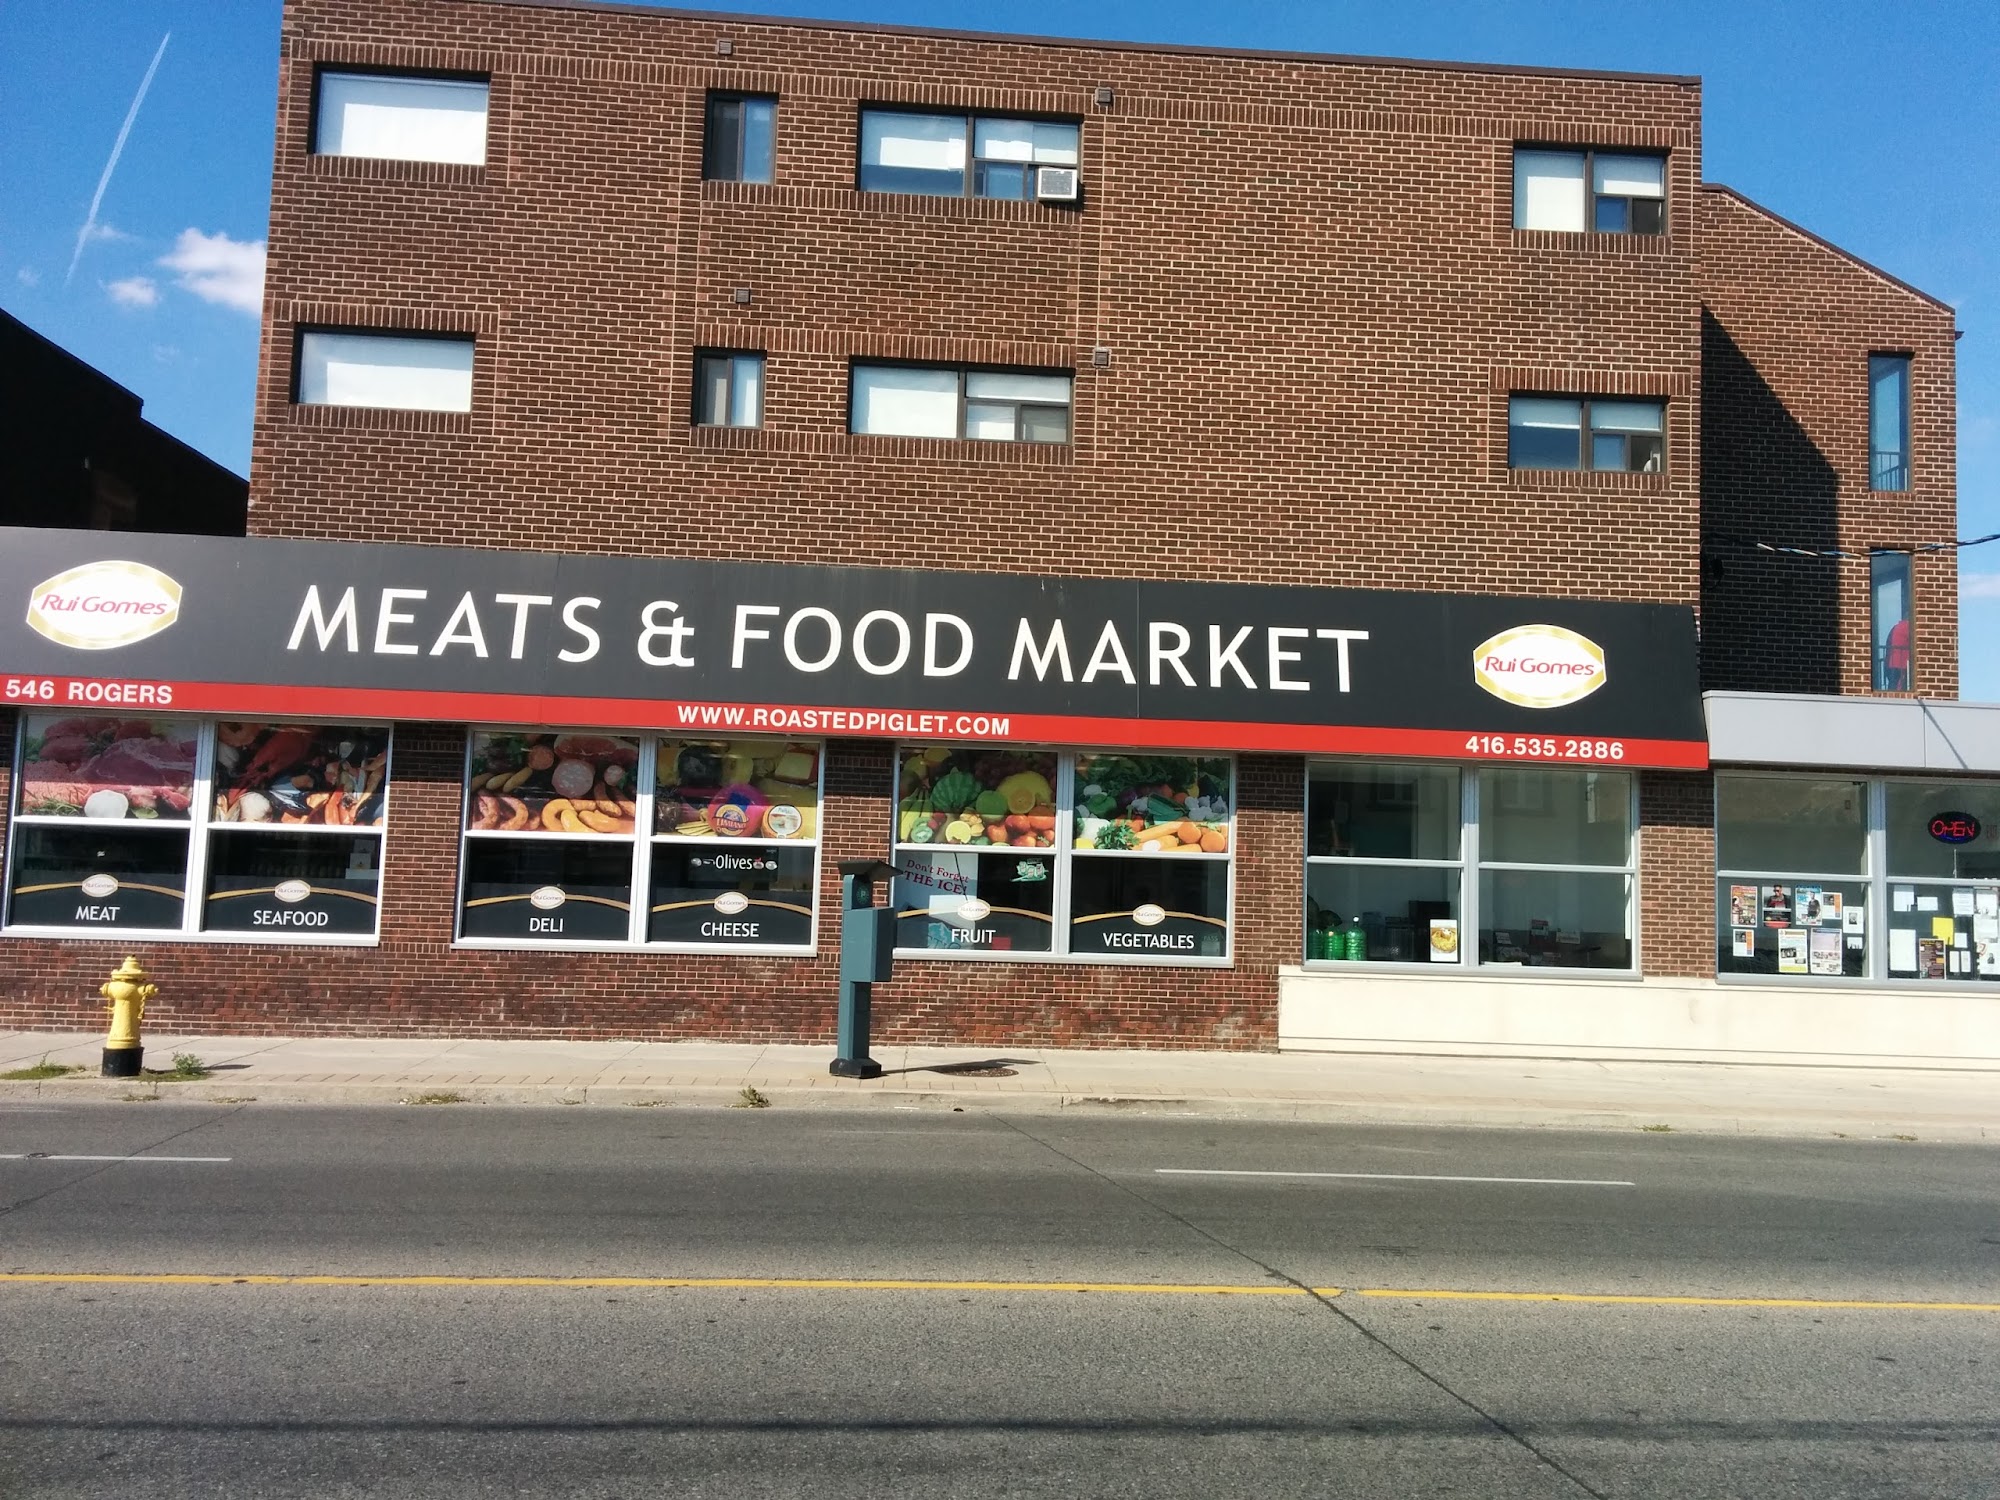 Rui Gomes Meats & Food Market